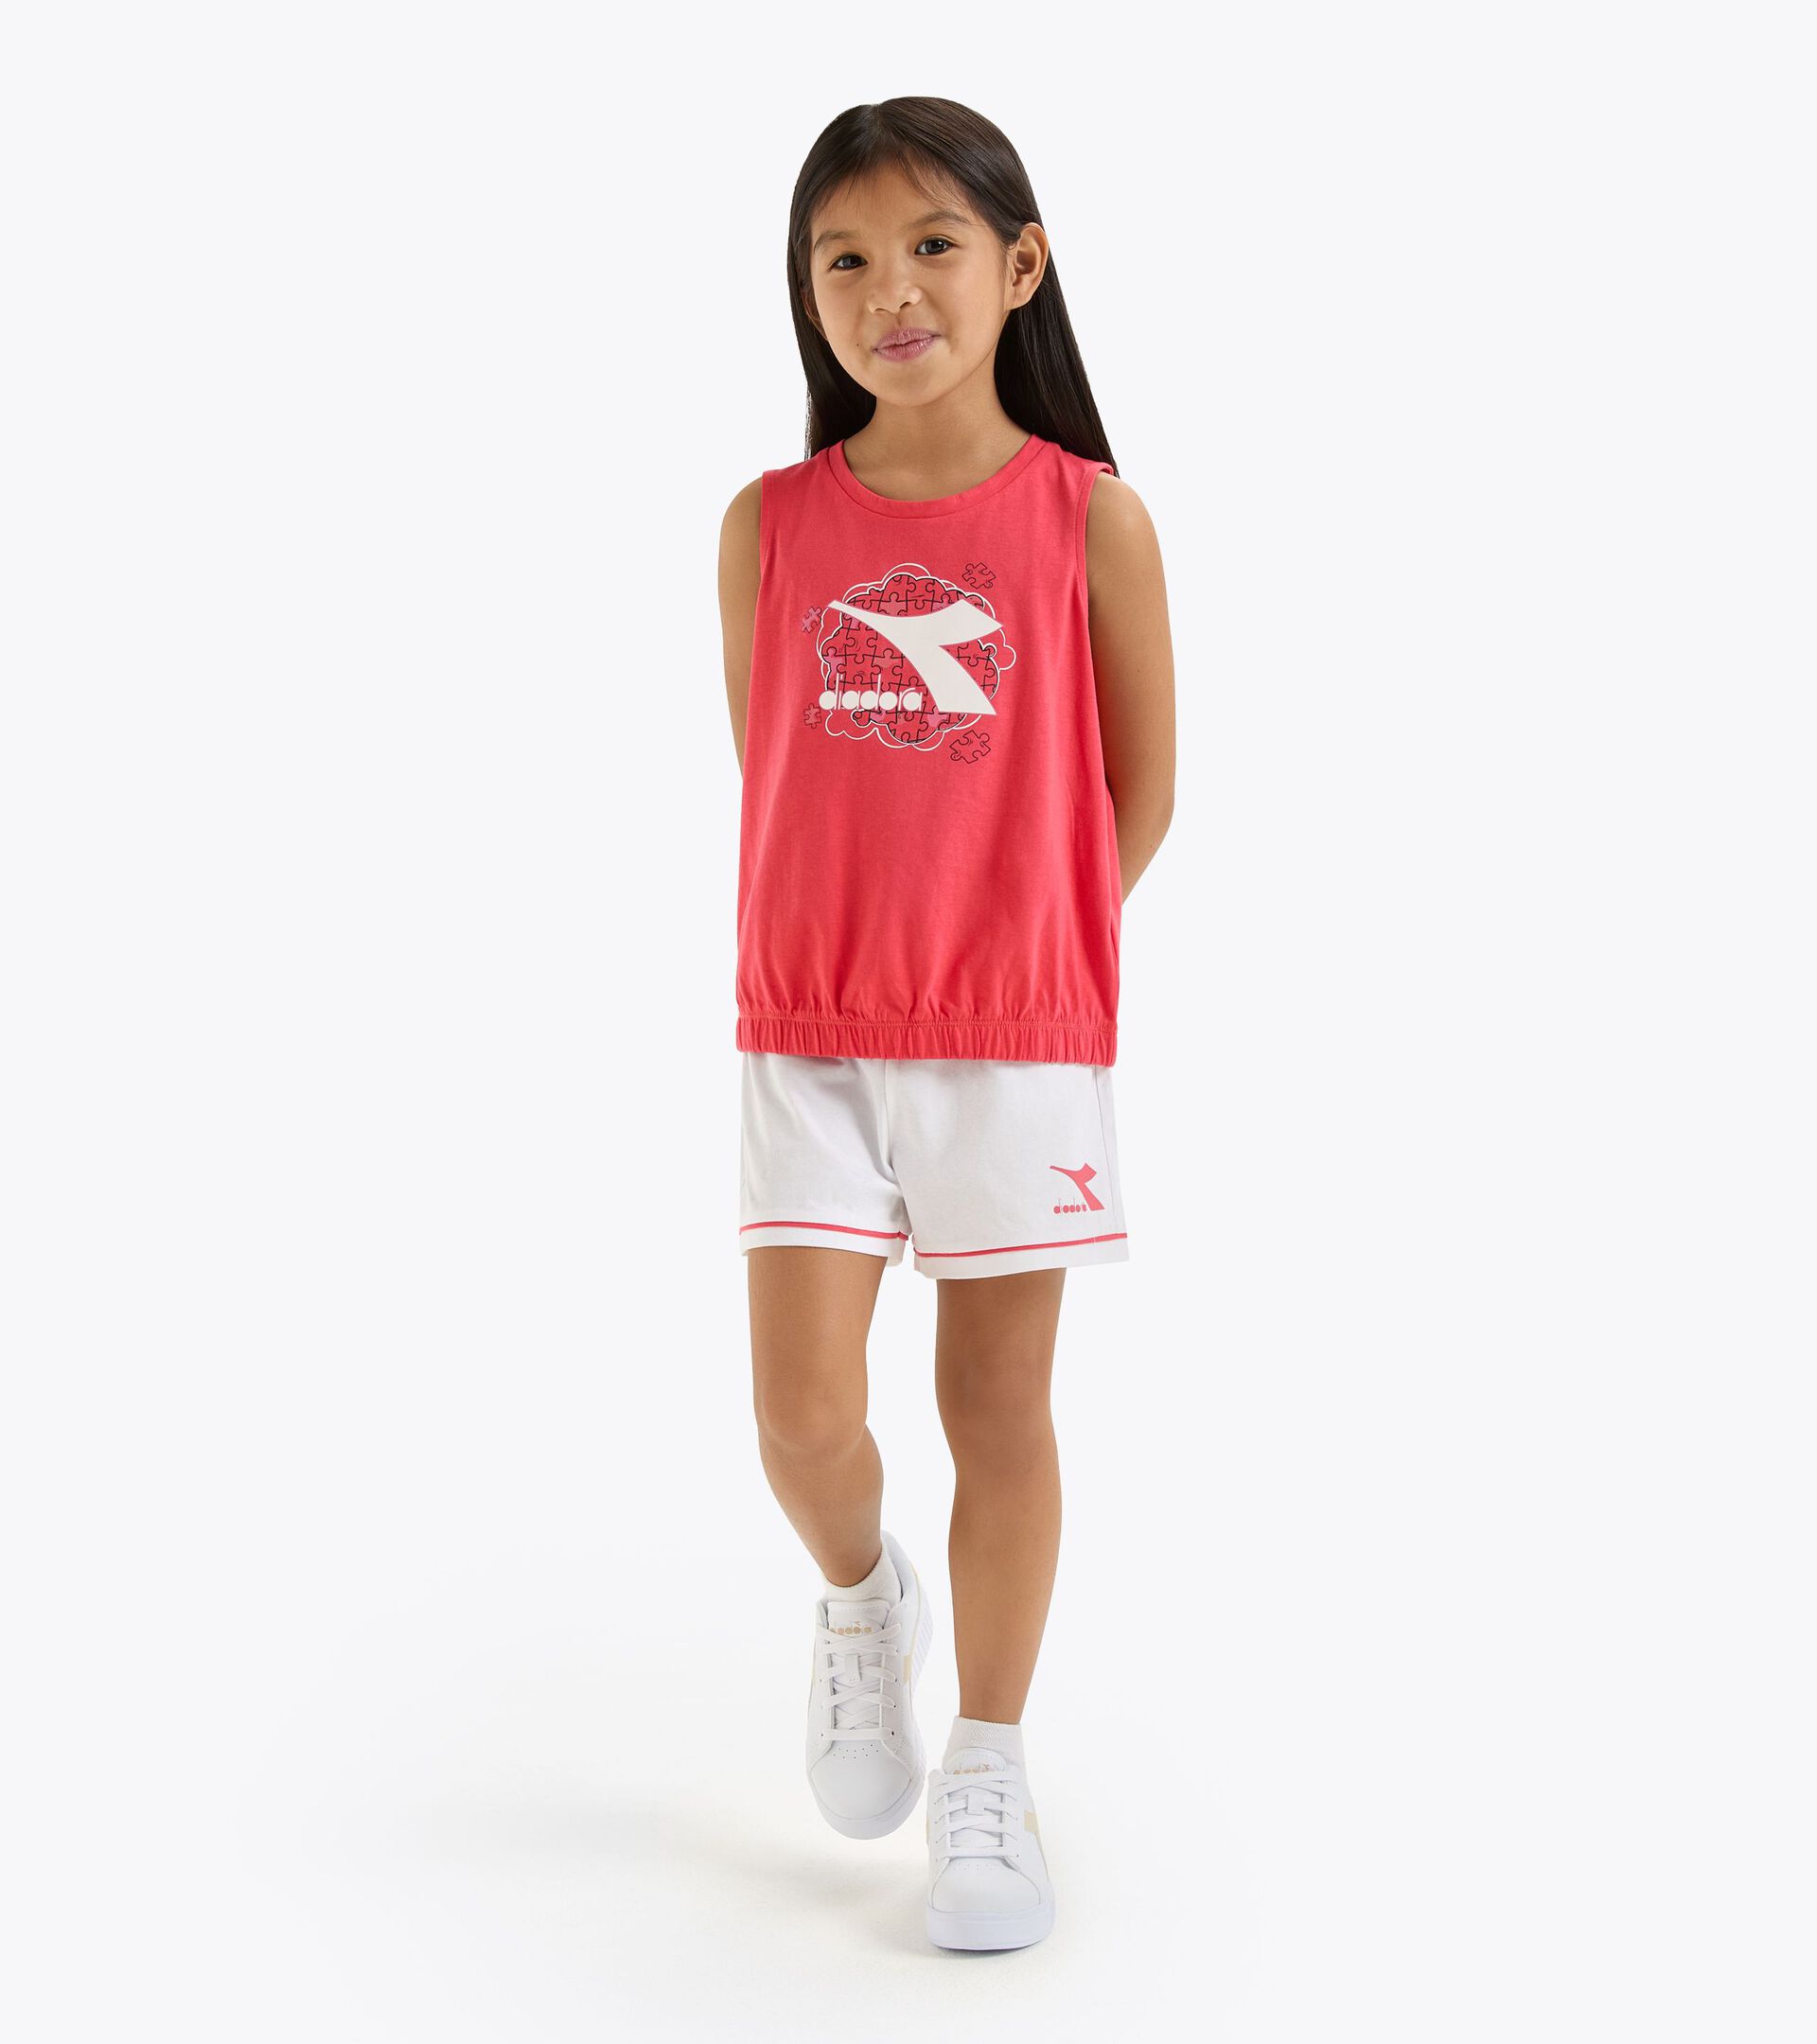 Sports set - Tank top and shorts - Girl
 JG. SET SS PUZZLES CAYENNE RED - Diadora